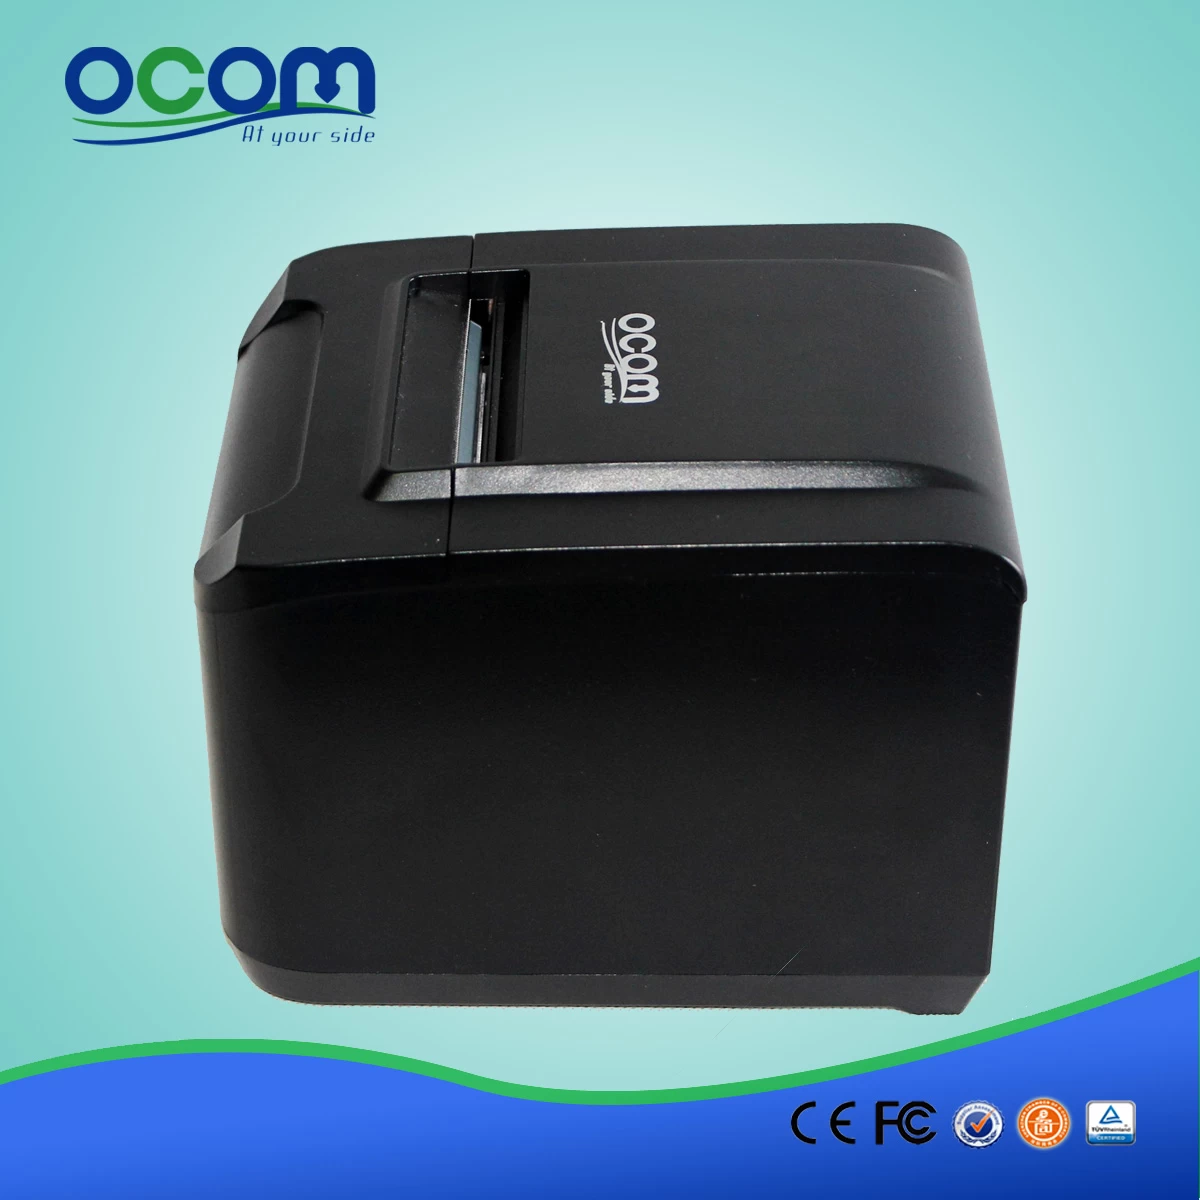 (OCPP-808-W) 3" High Speed Auto-cutter WIFI Thermal Receipt Printer